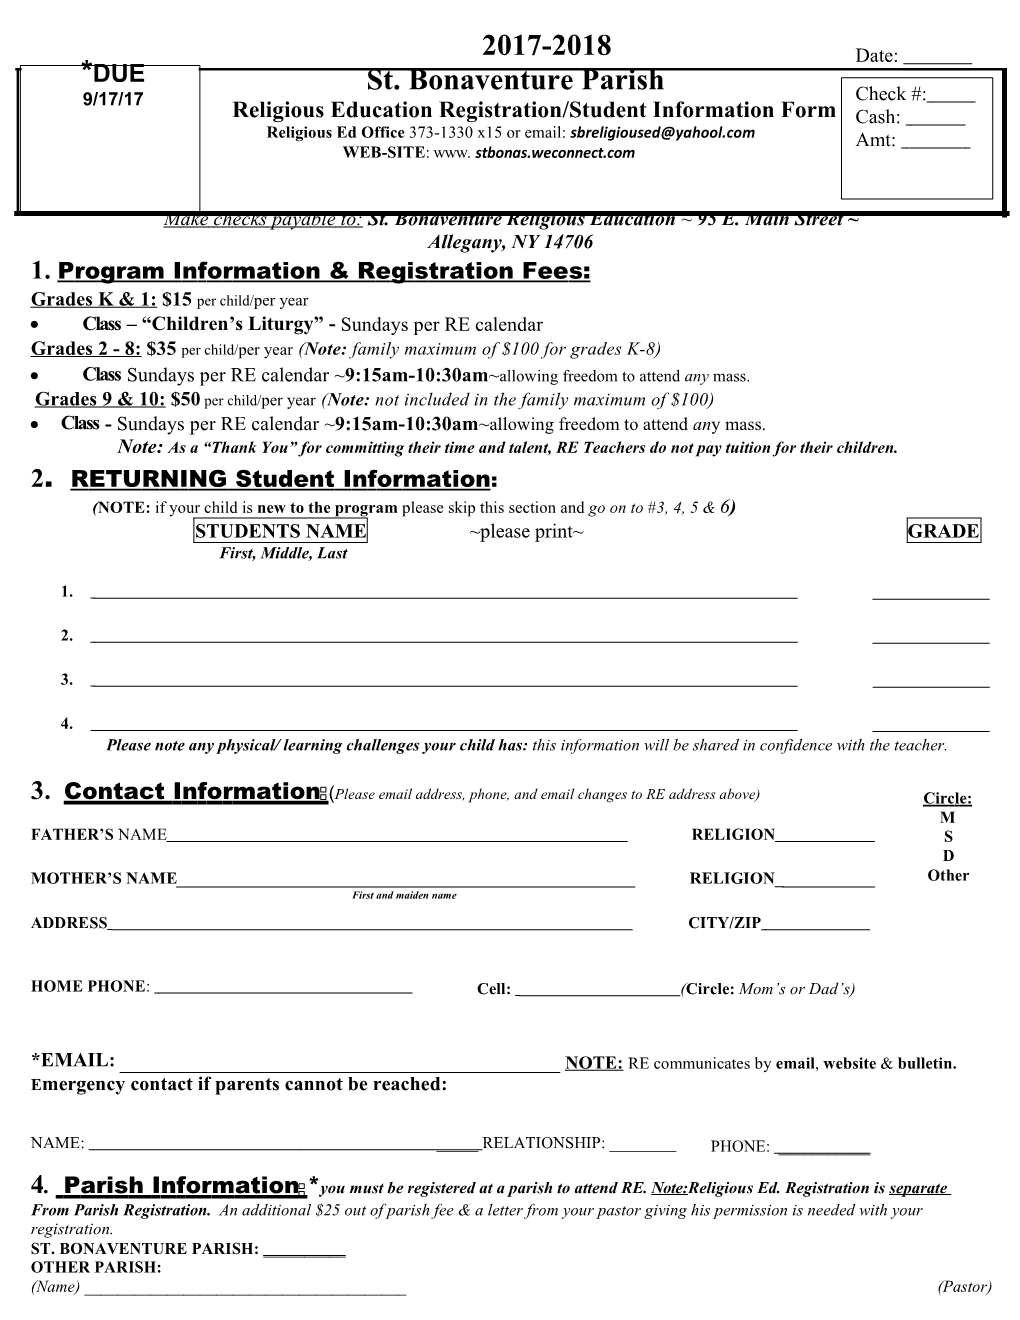 Religious Education Registration/Student Information Form